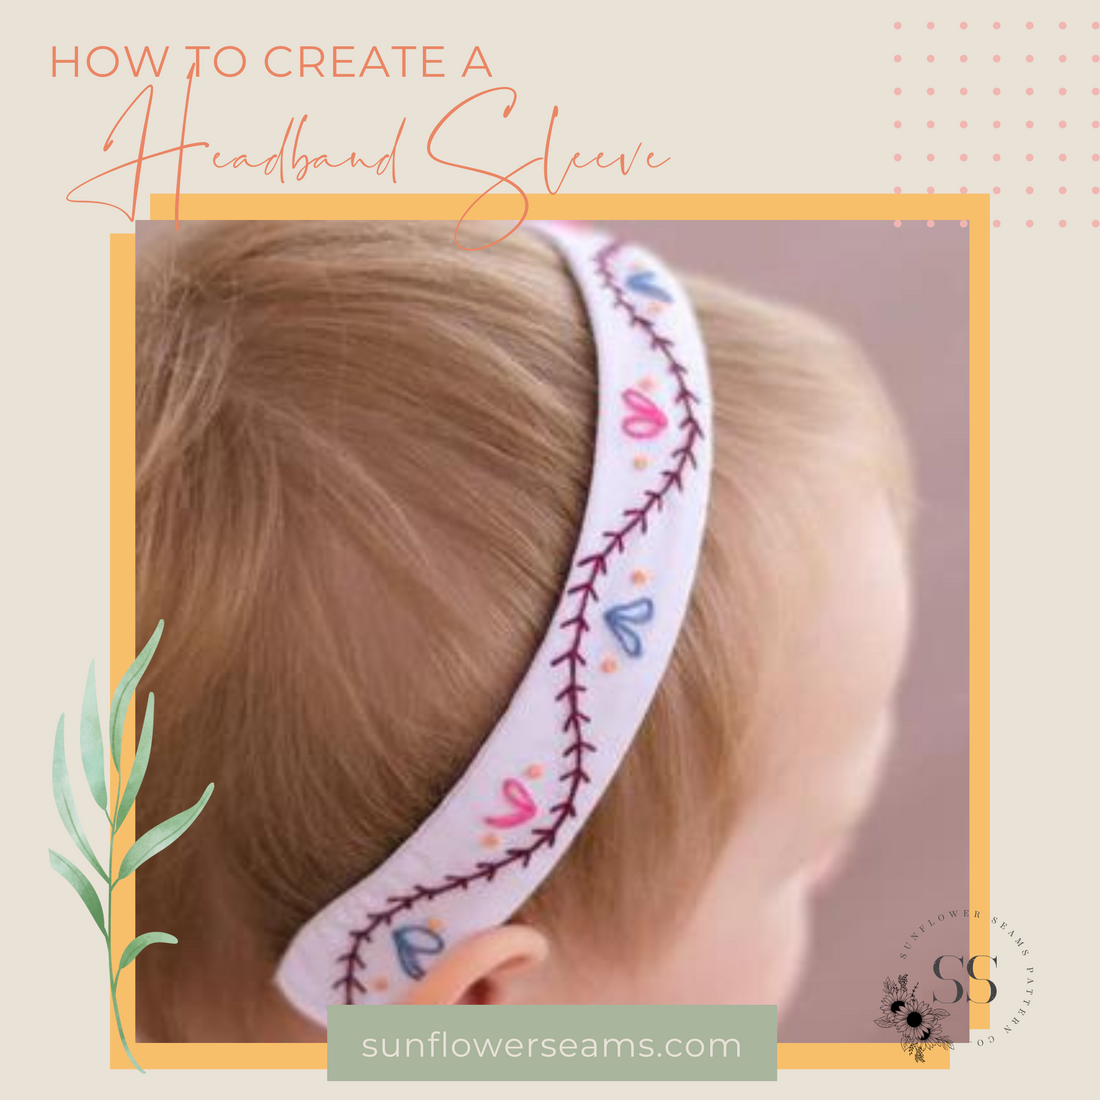 How to Create a Headband Sleeve